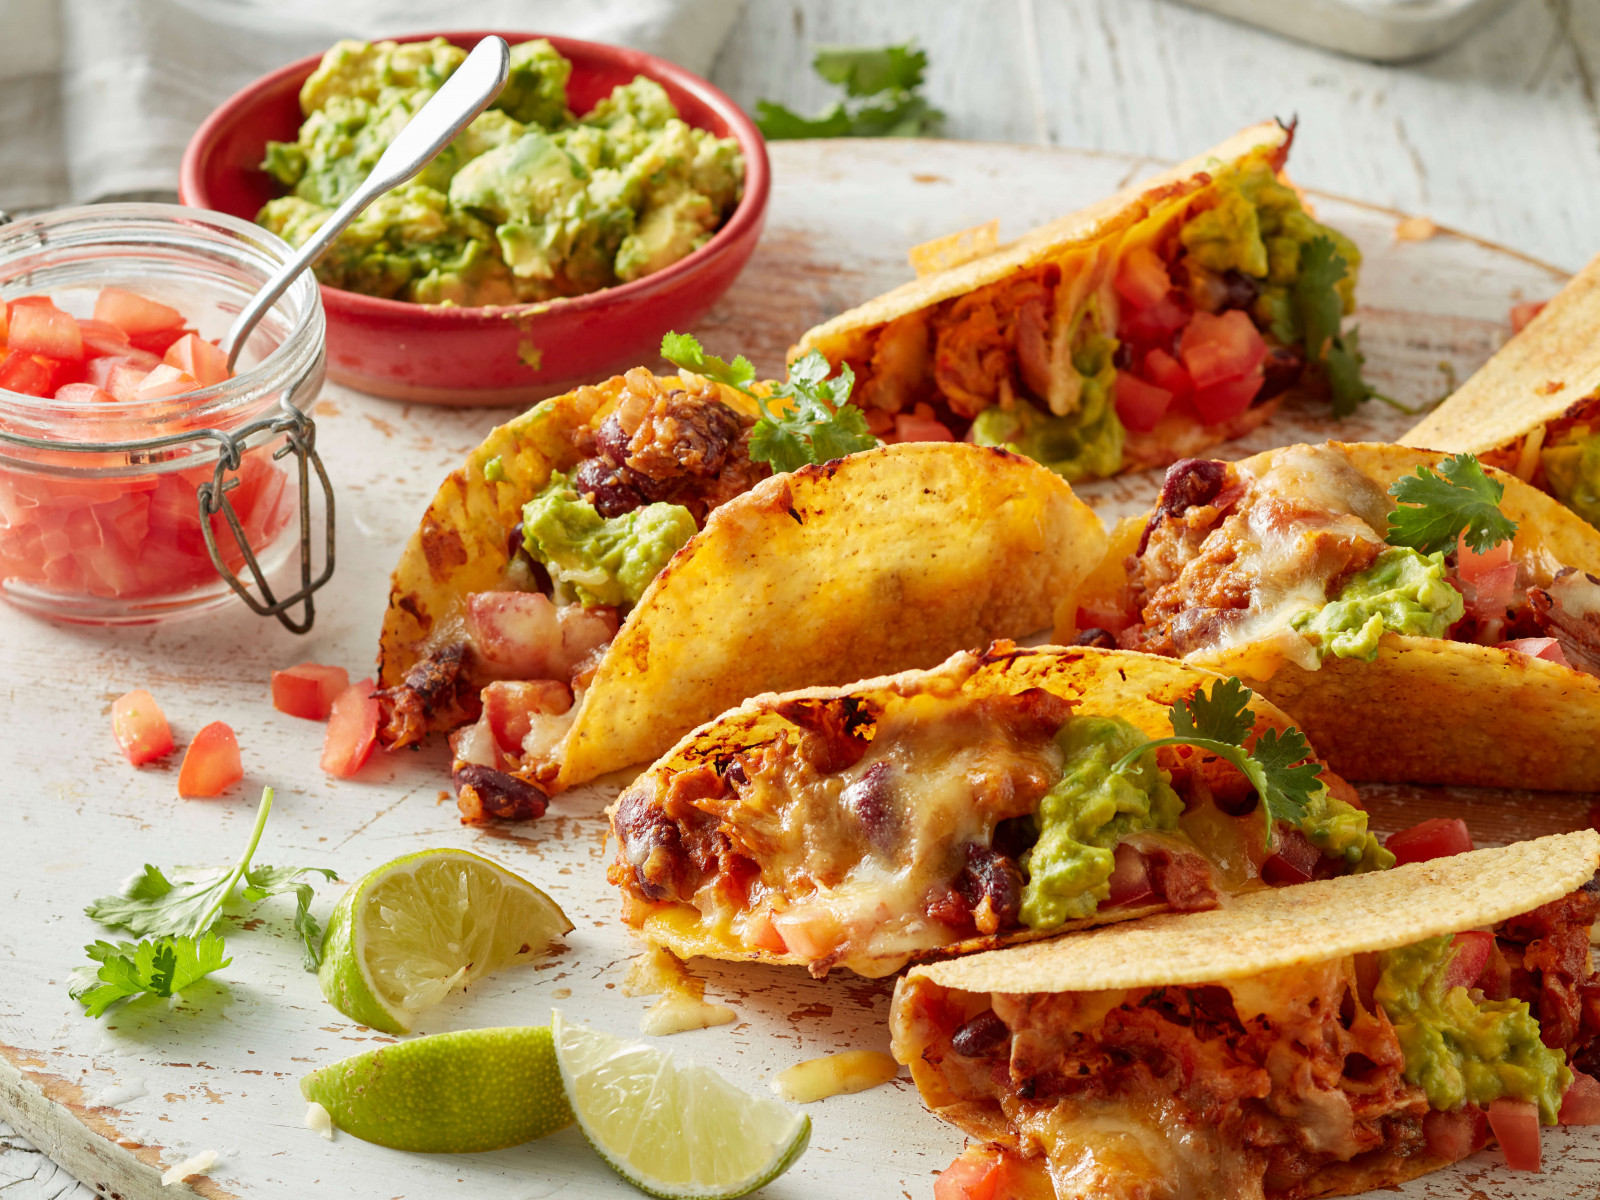 Taqueria-Style Chicken Tacos Recipe (30 Minutes!) - The Food Charlatan